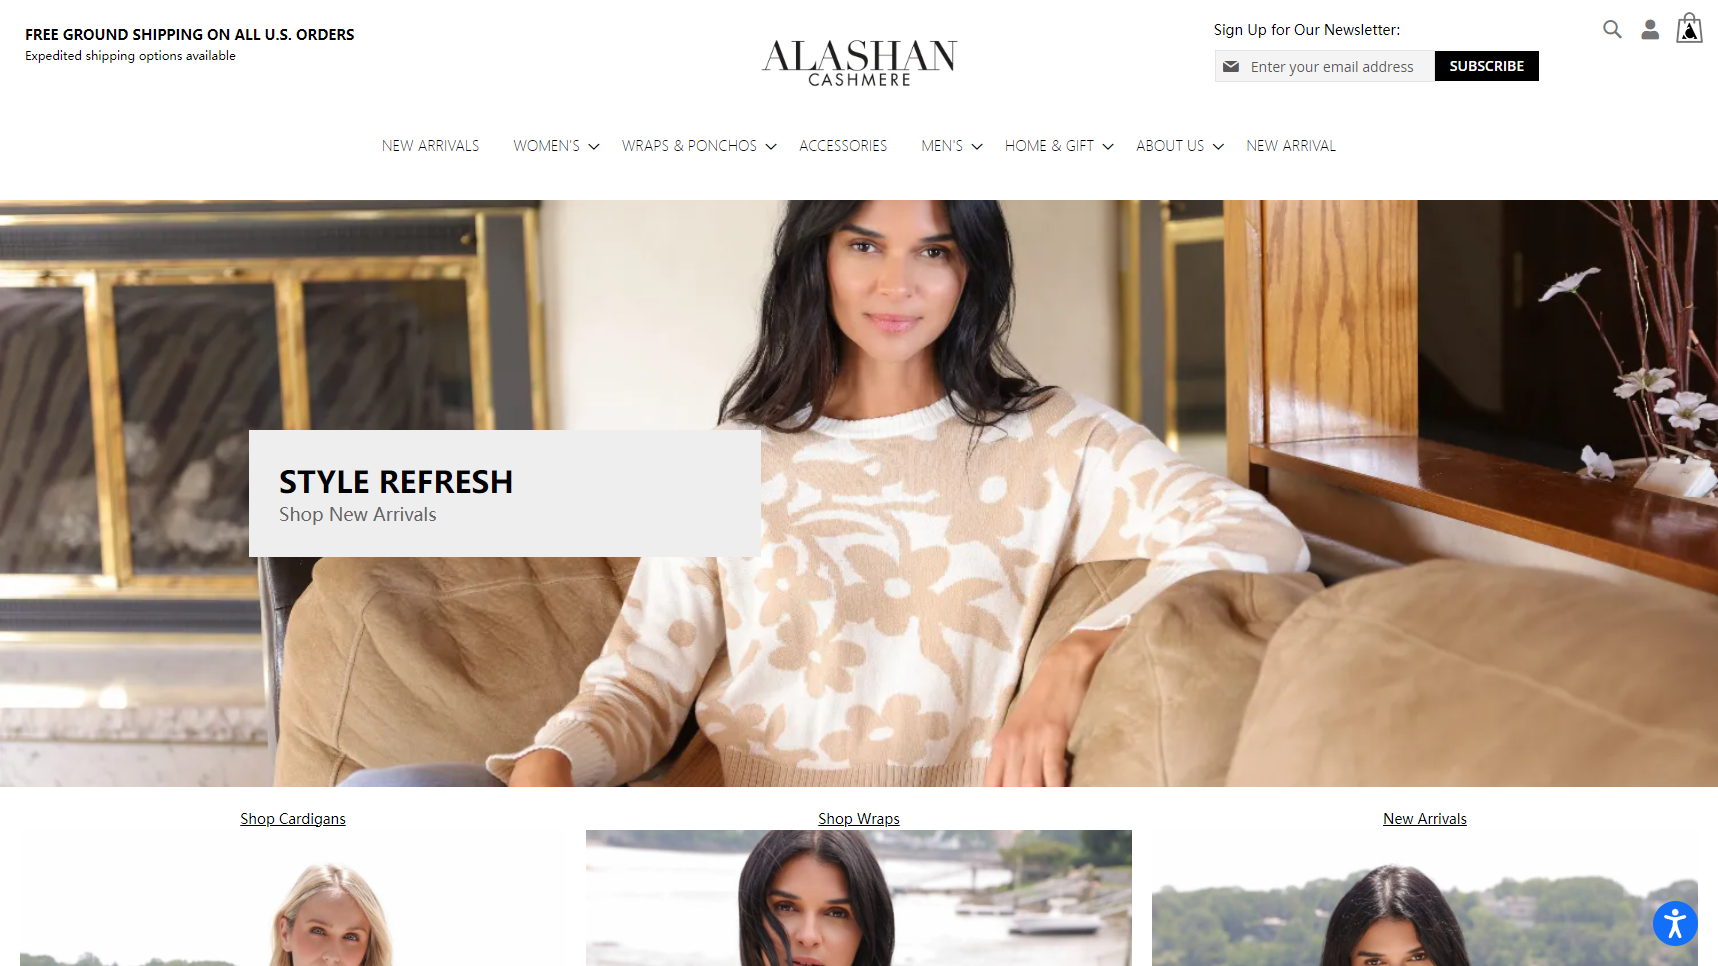 Alashan Cashmere Company - Cashmere Sweater Manufacturer